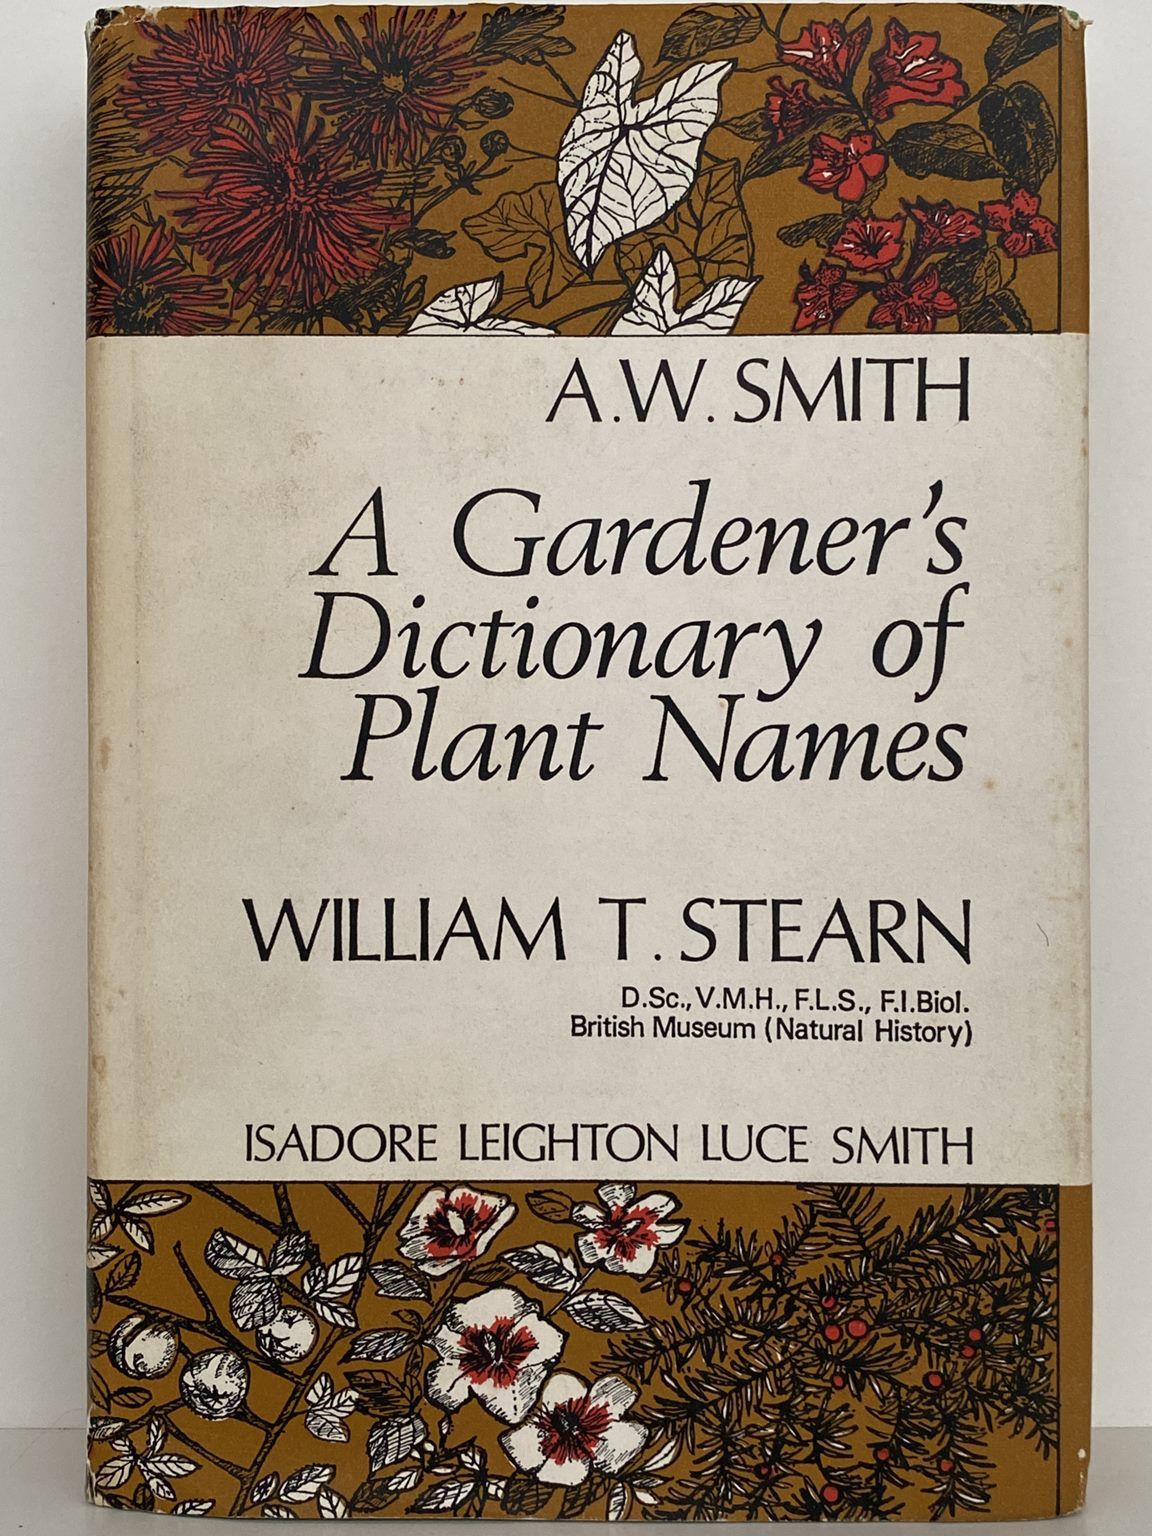 A GARDENER'S DICTIONARY OF PLANT NAMES